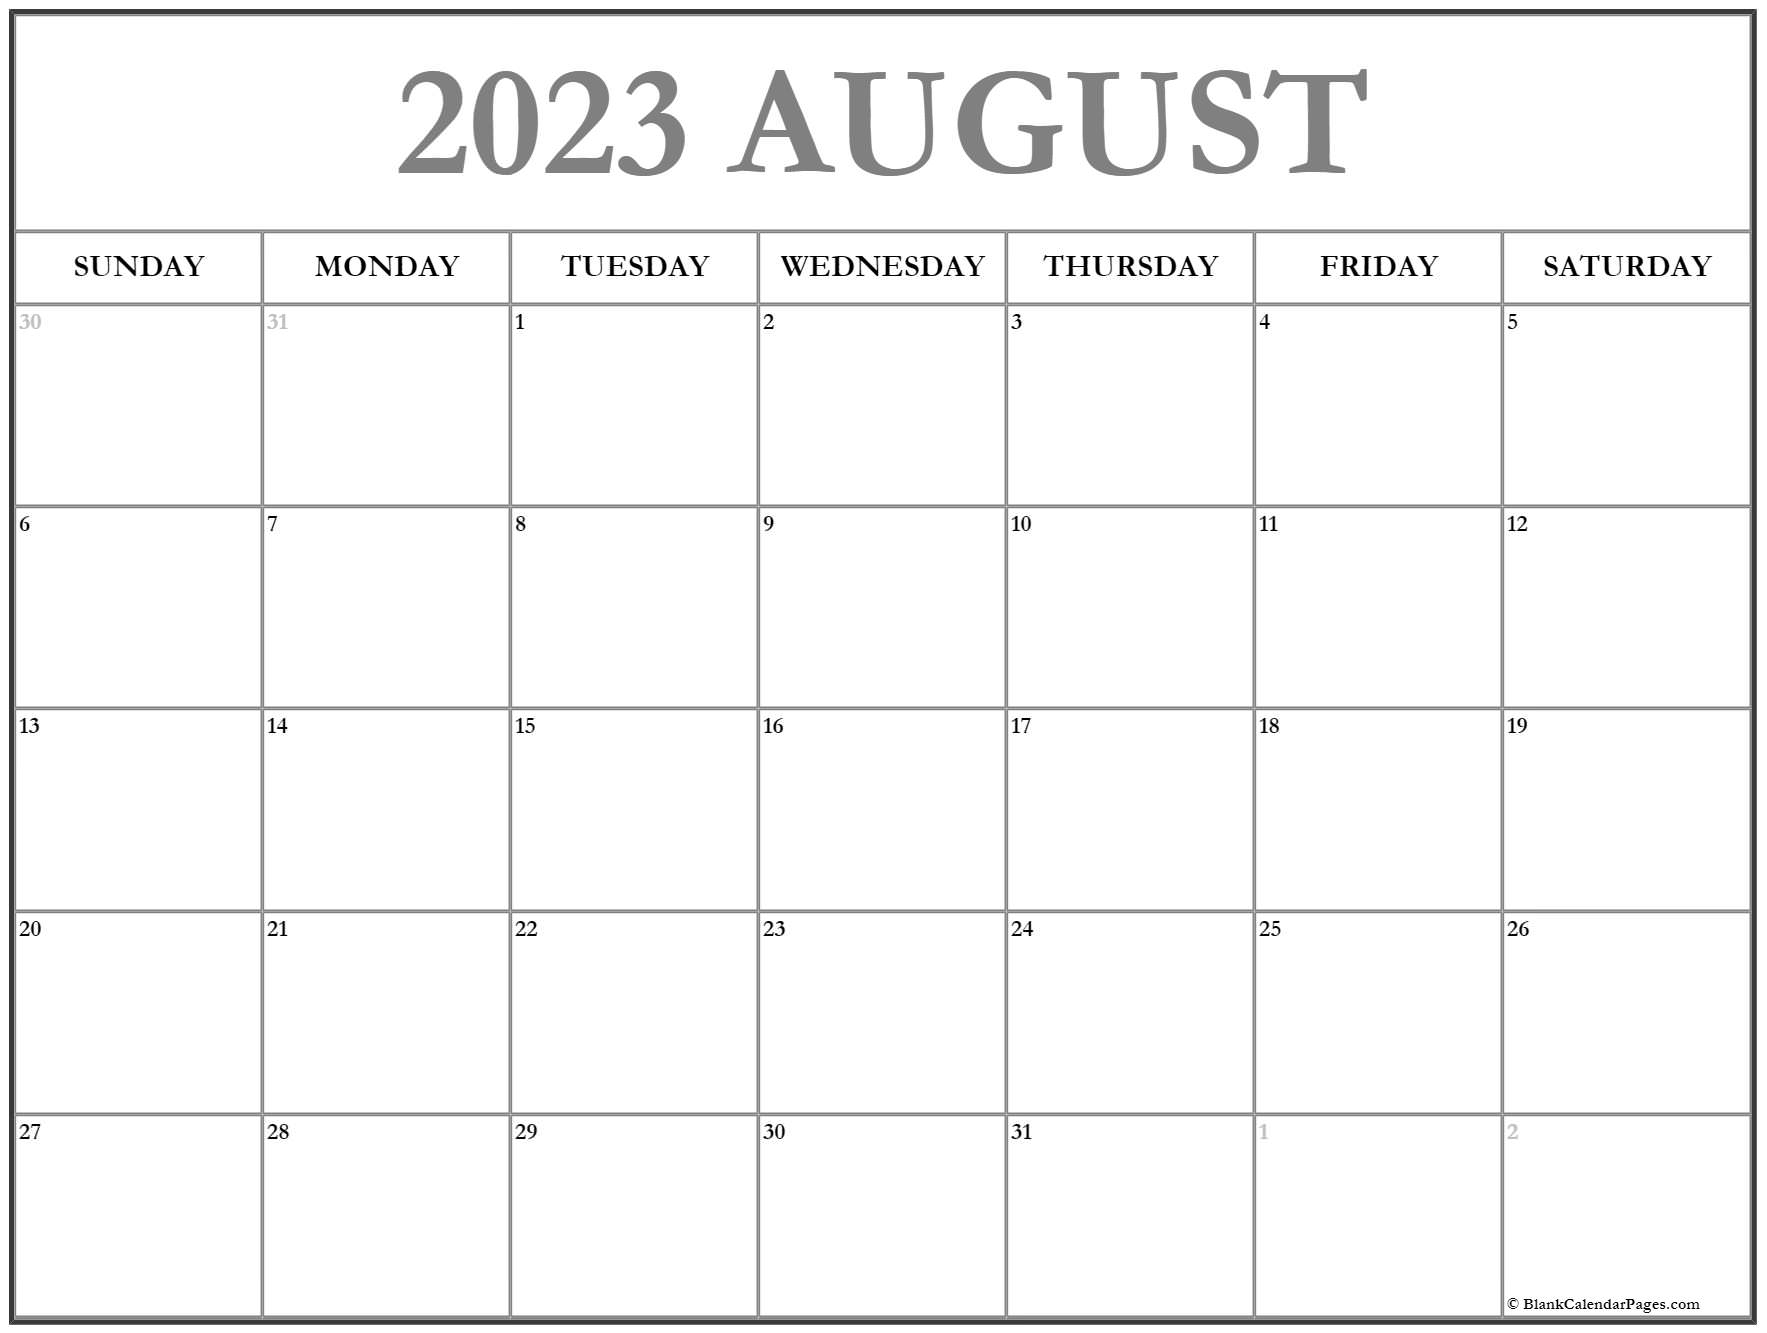 august-2042-printable-blank-calendar